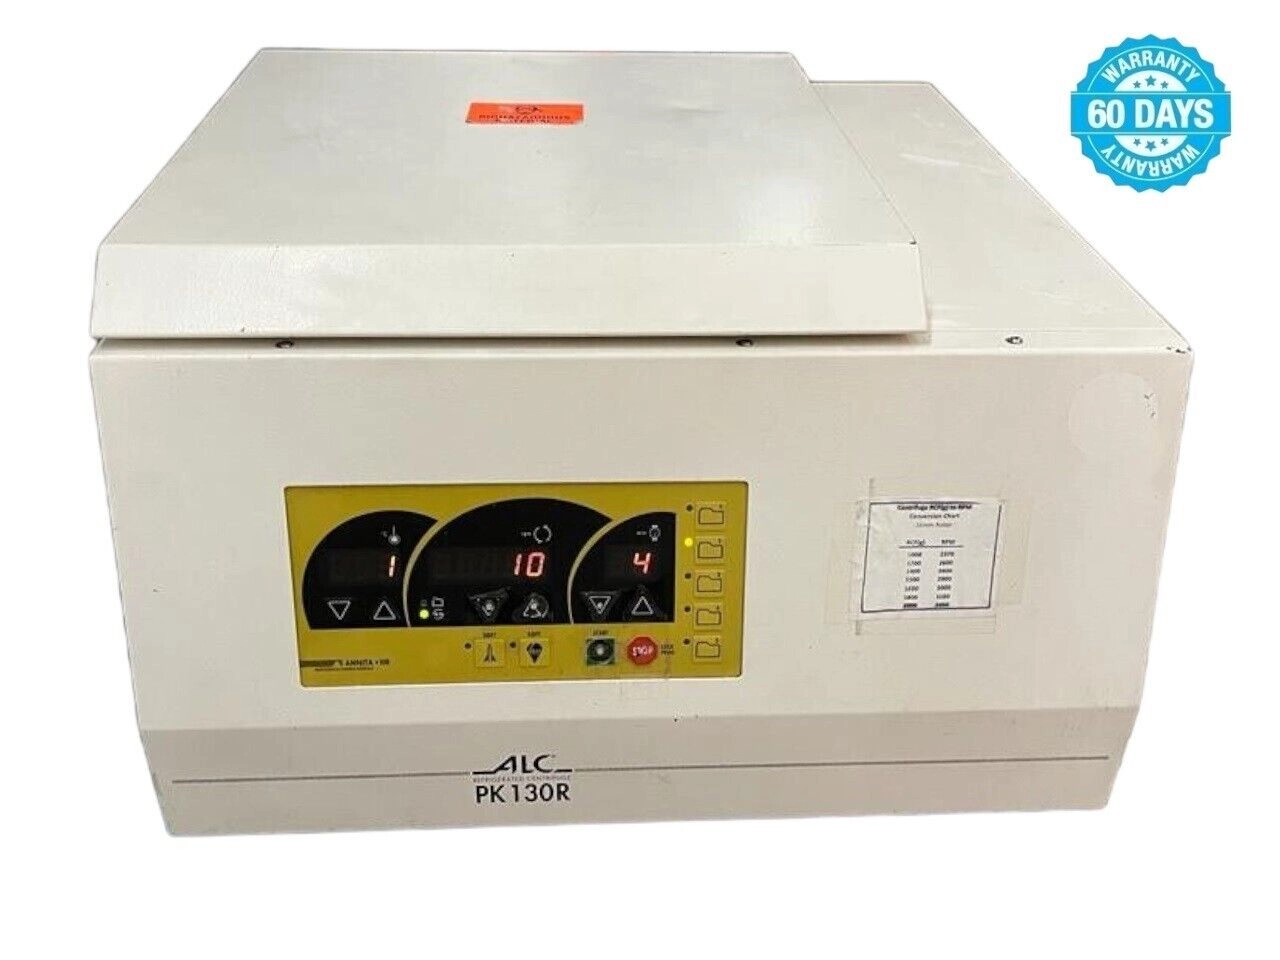 ALC PK 130R Refrigerated Laboratory Centrifuge